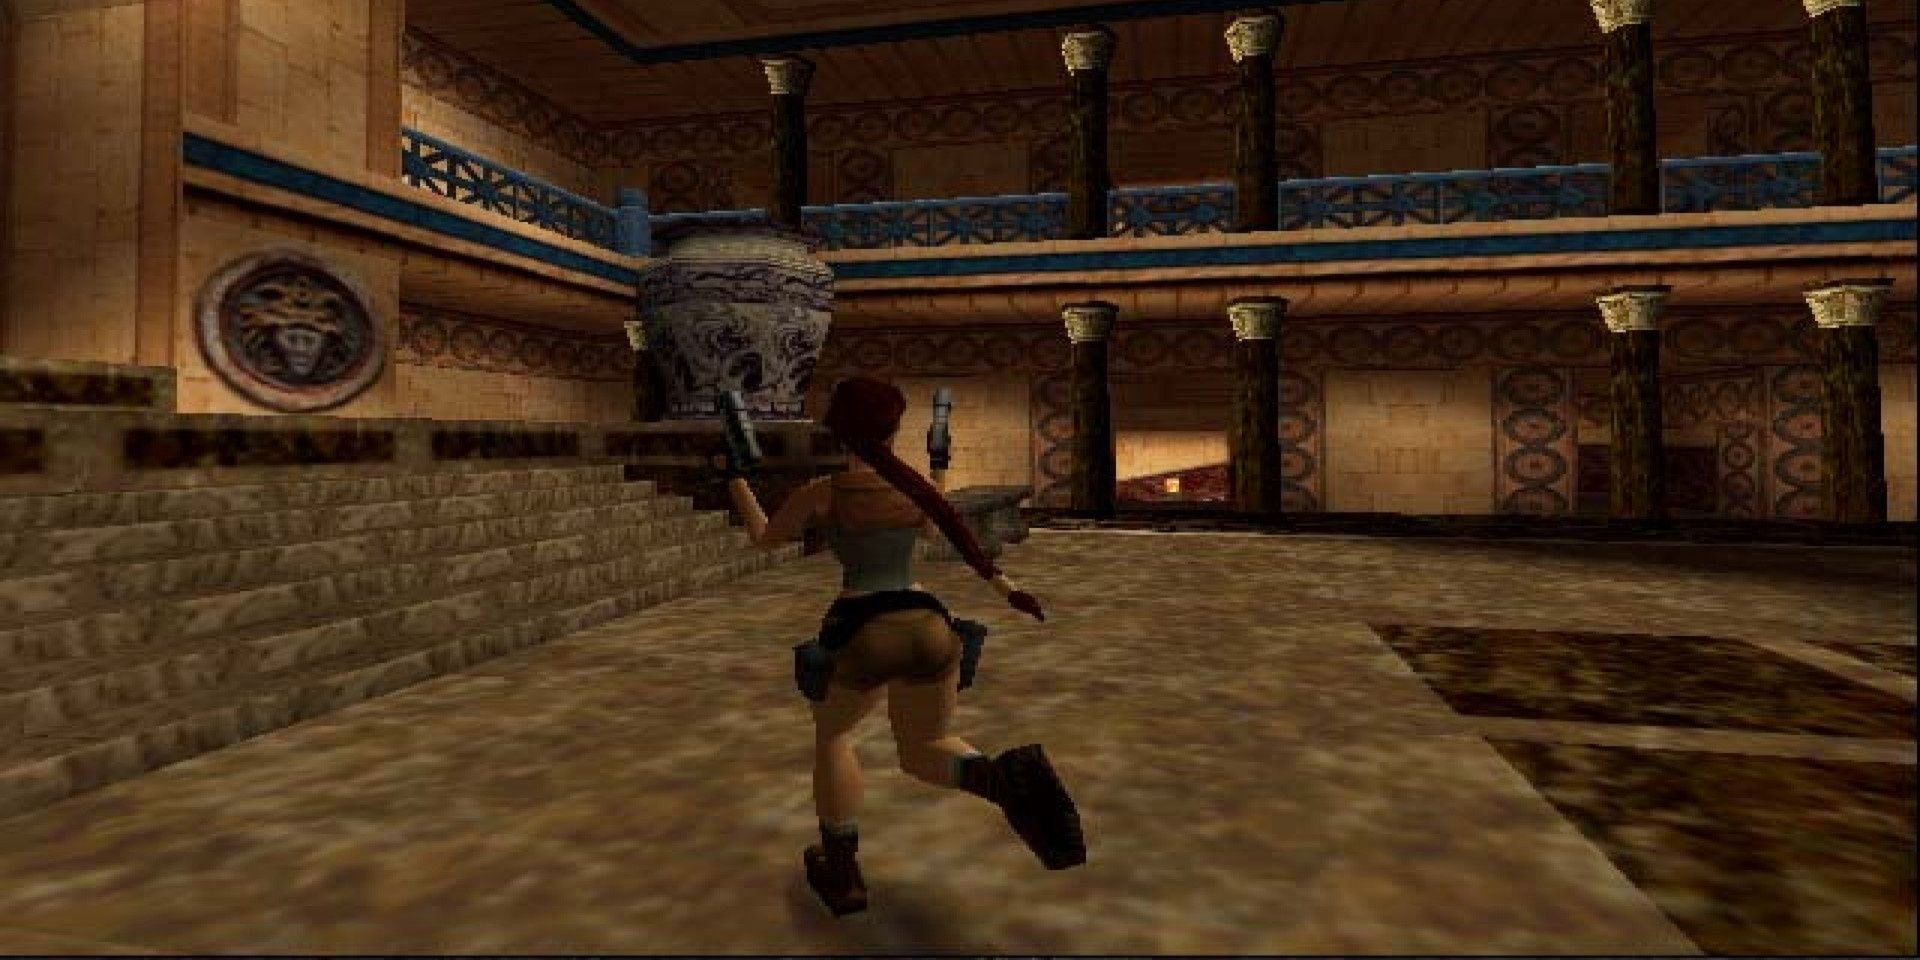 A screenshot showing Lara Croft in Tomb Raider: The Last Revelation